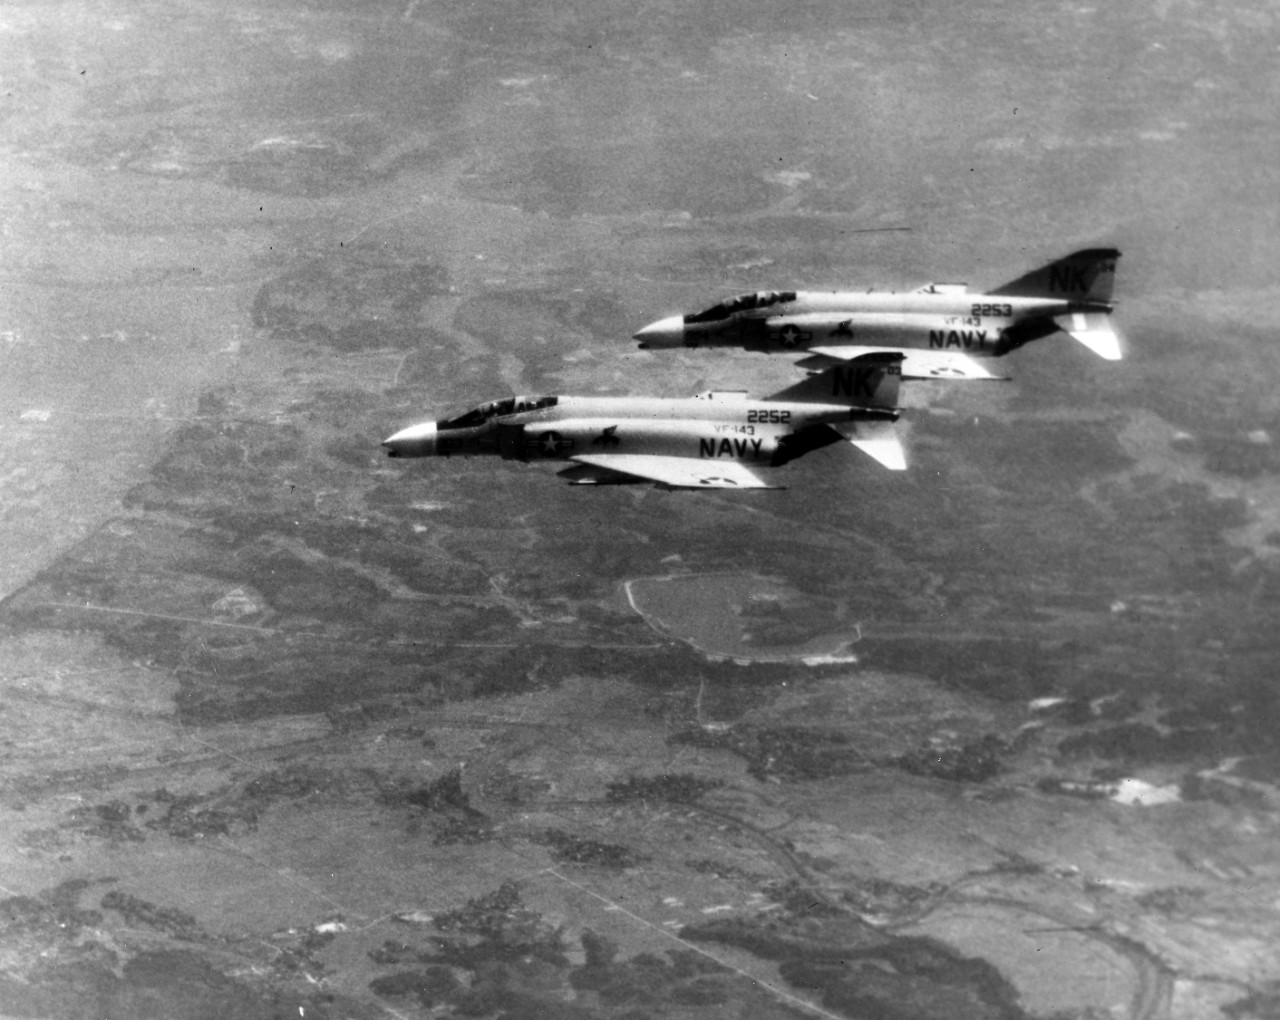 Two F-4B Phantoms